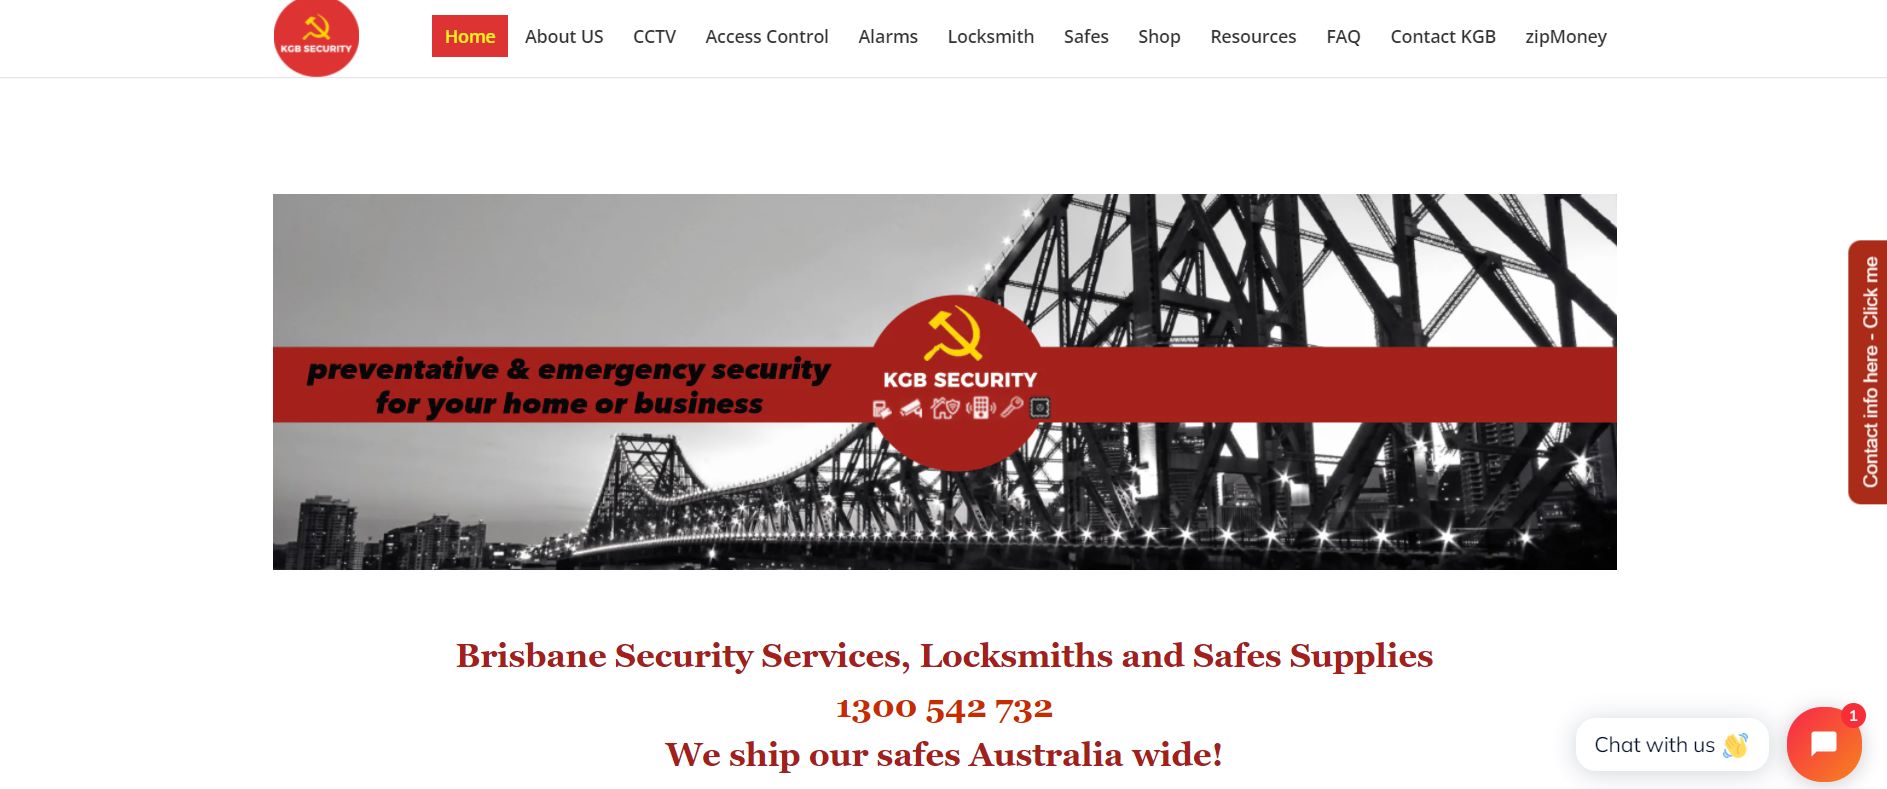 kgb security services security guard company brisbane